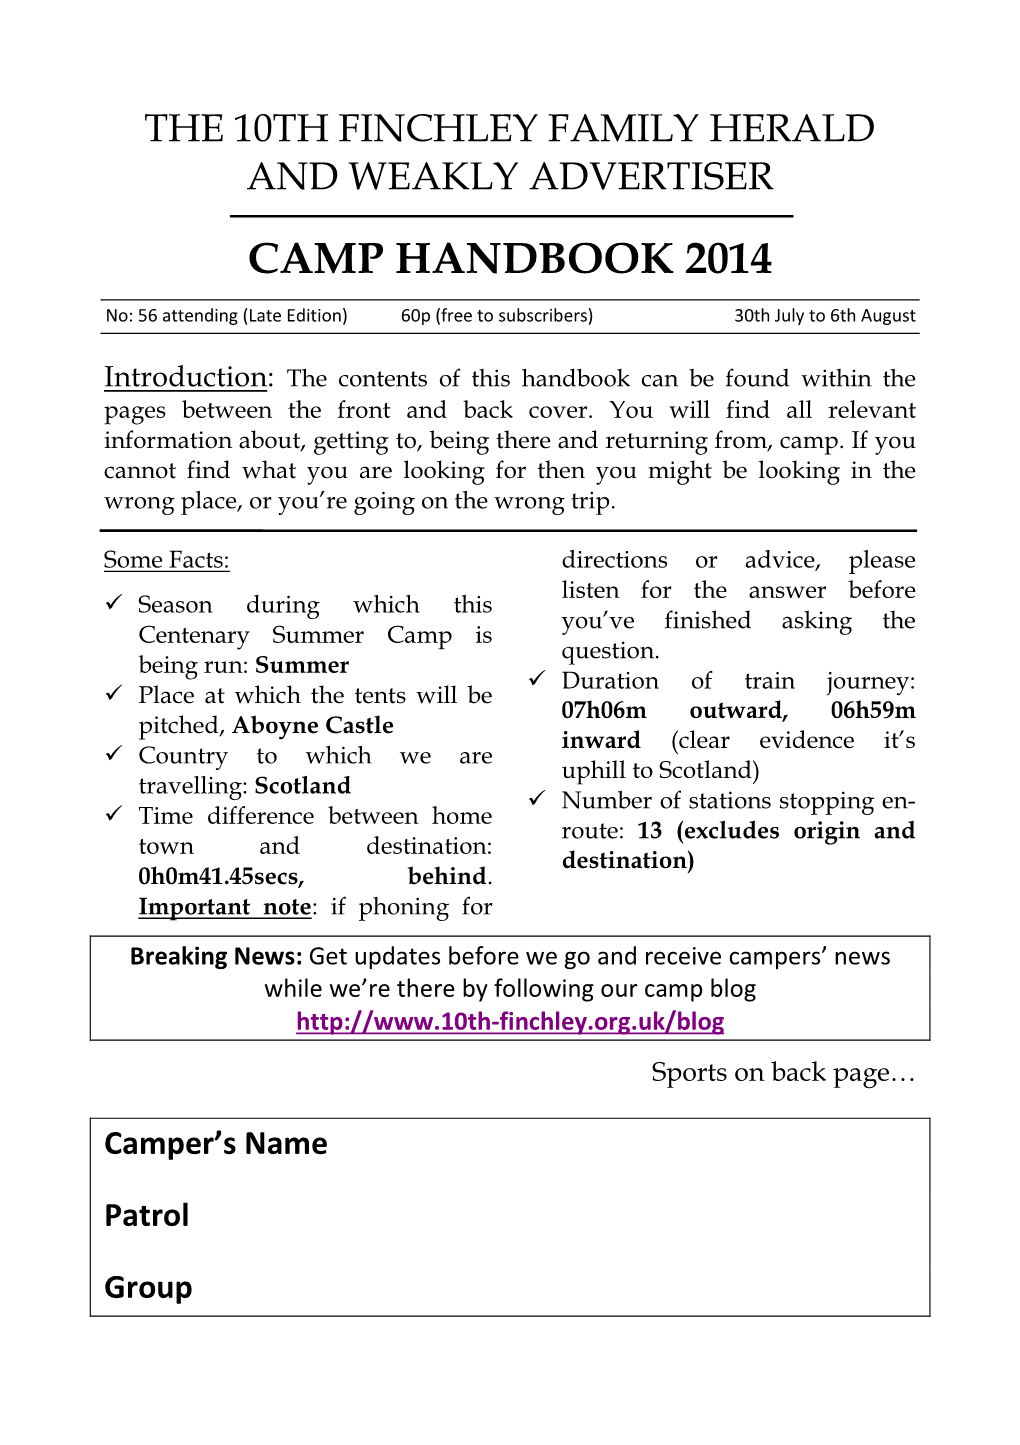 Camp Handbook 2014